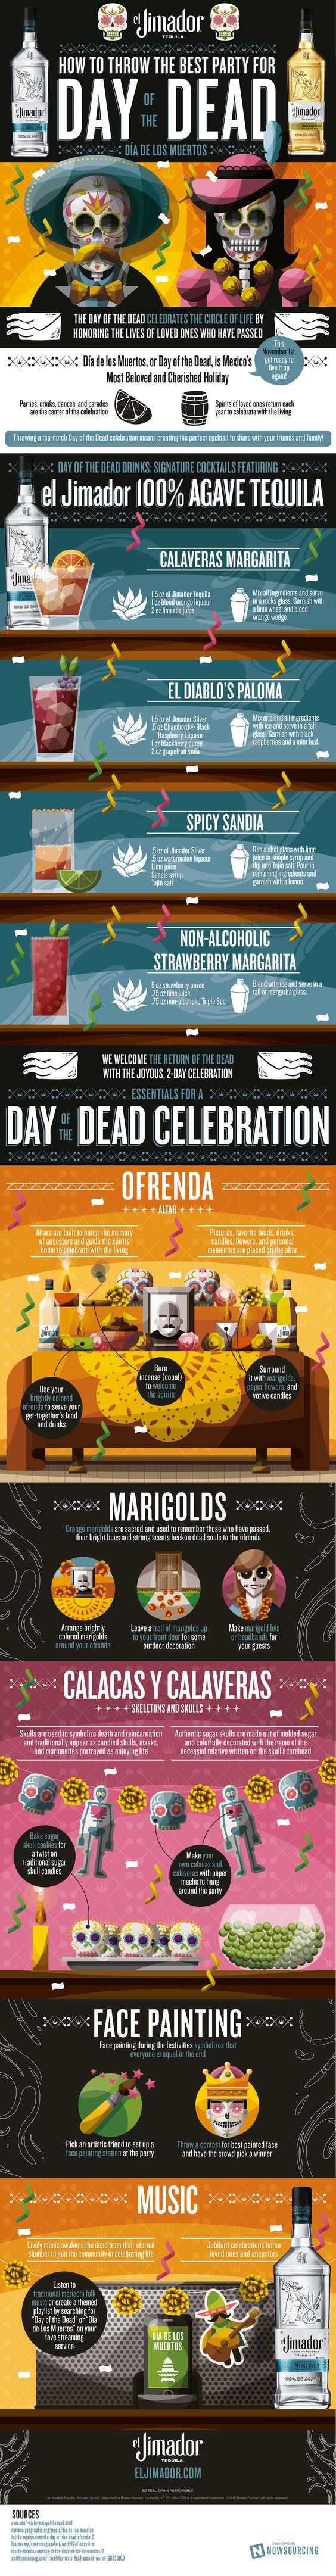 Celebrate Day Of The Dead November 1st!